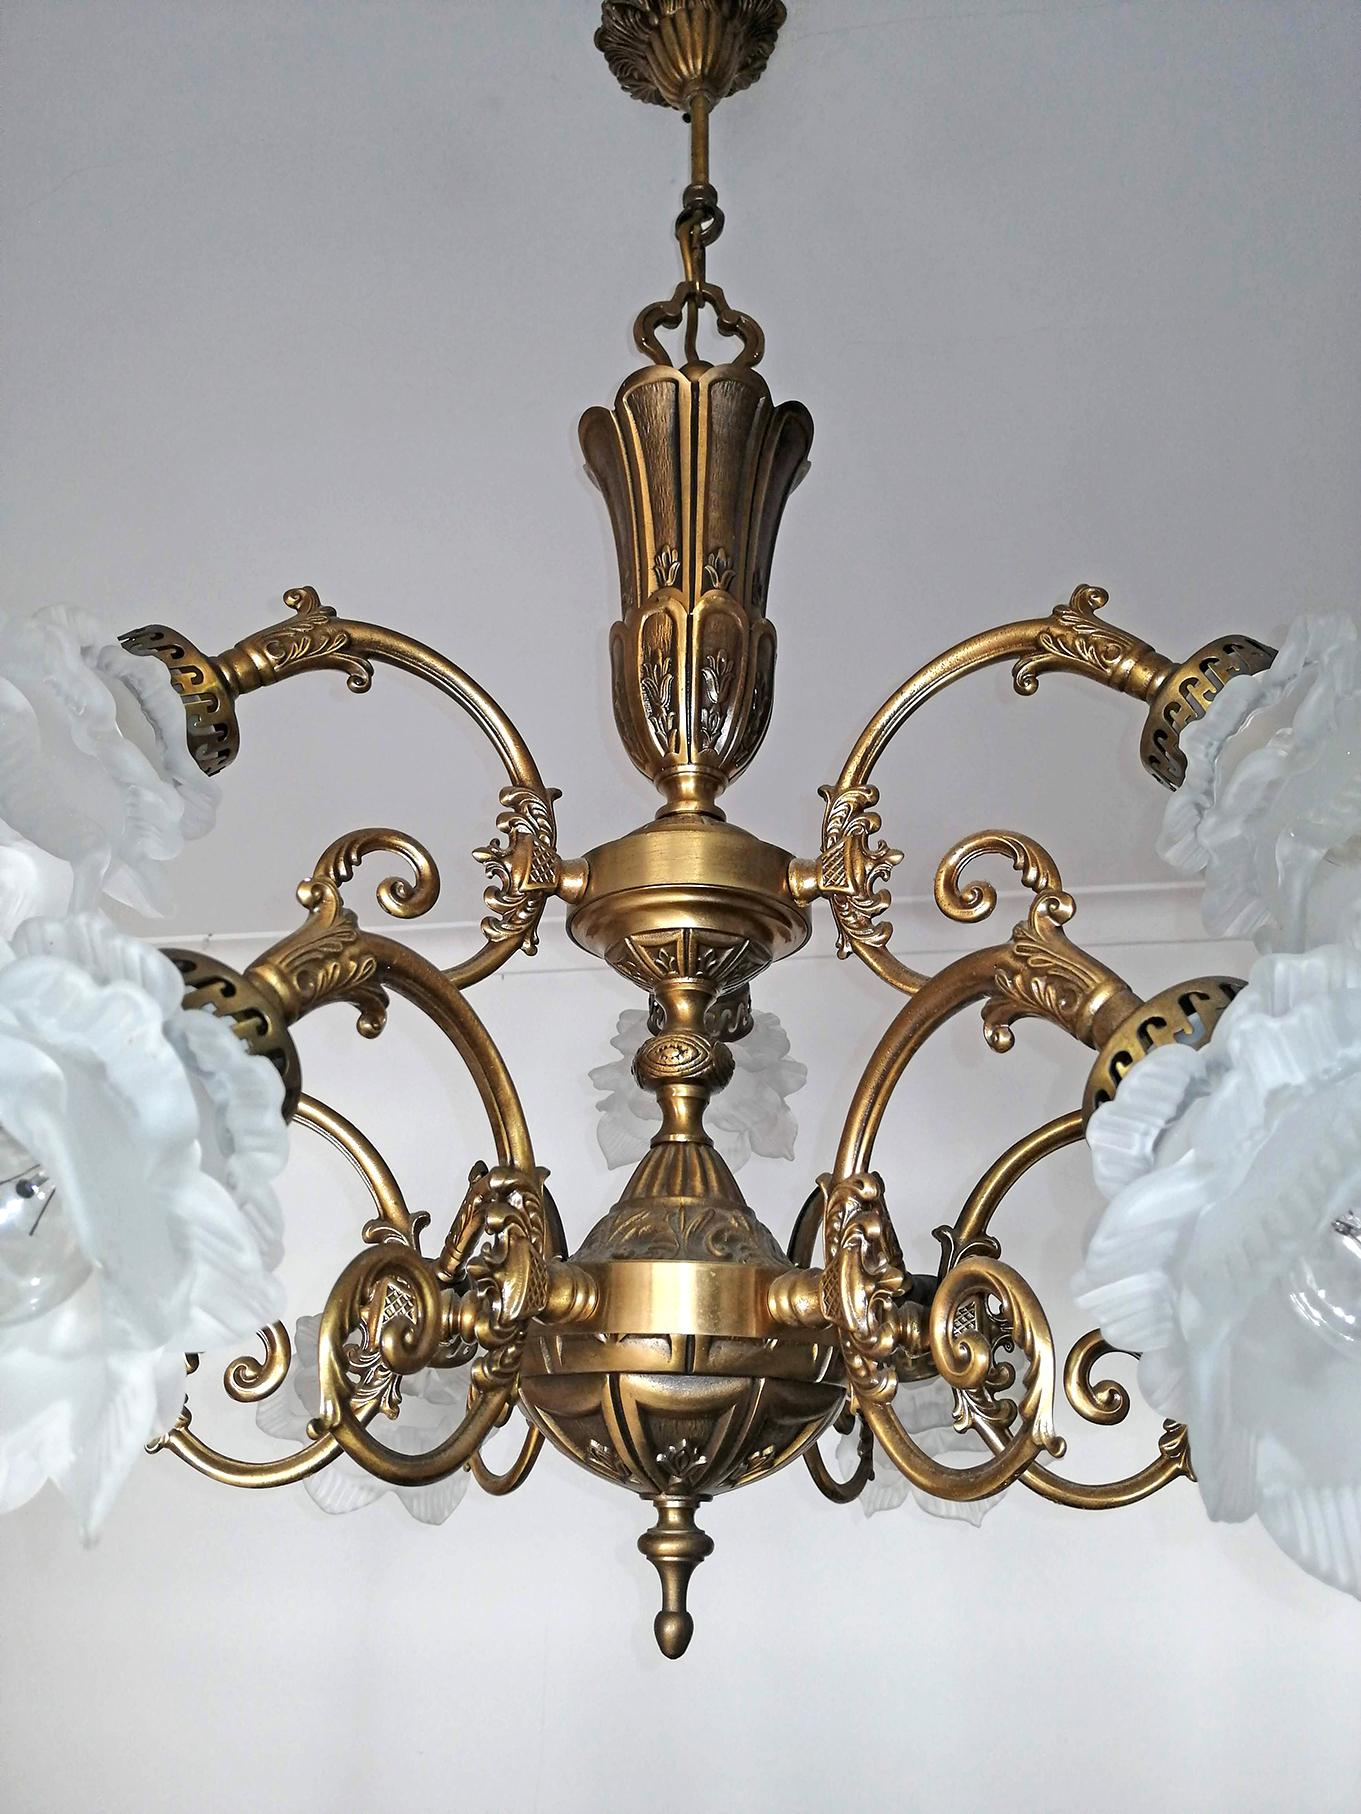 20th Century French Art Nouveau or Art Deco Art Glass Flower & Gilt Brass 9-Light Chandelier For Sale